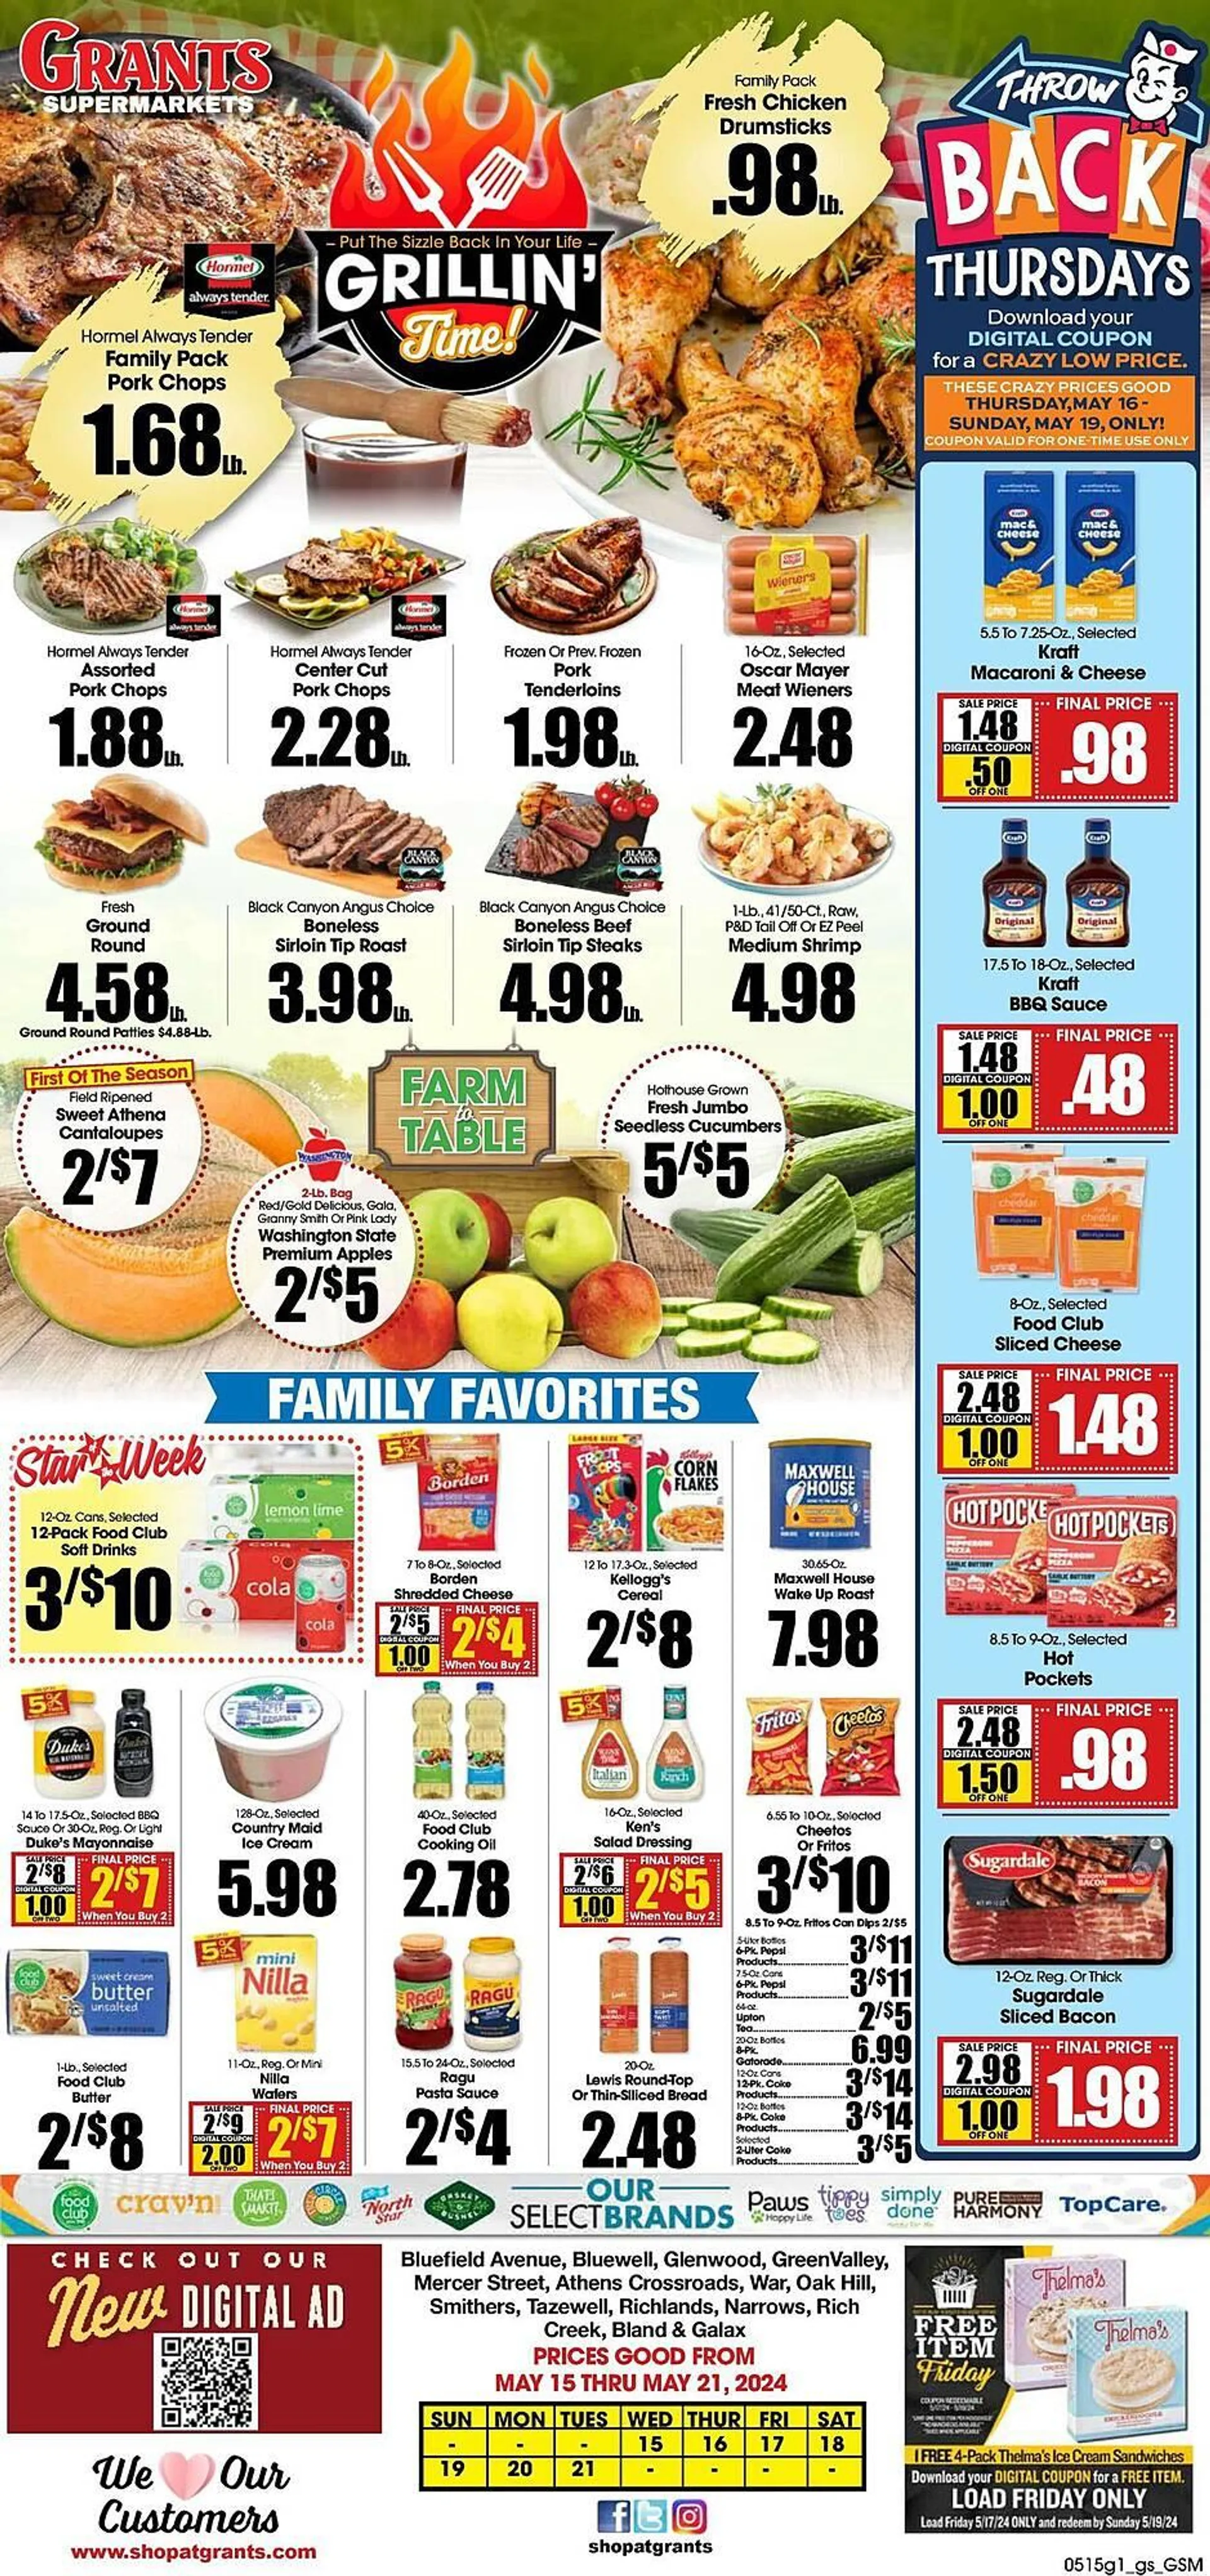 Grants Supermarket Weekly Ad - 1